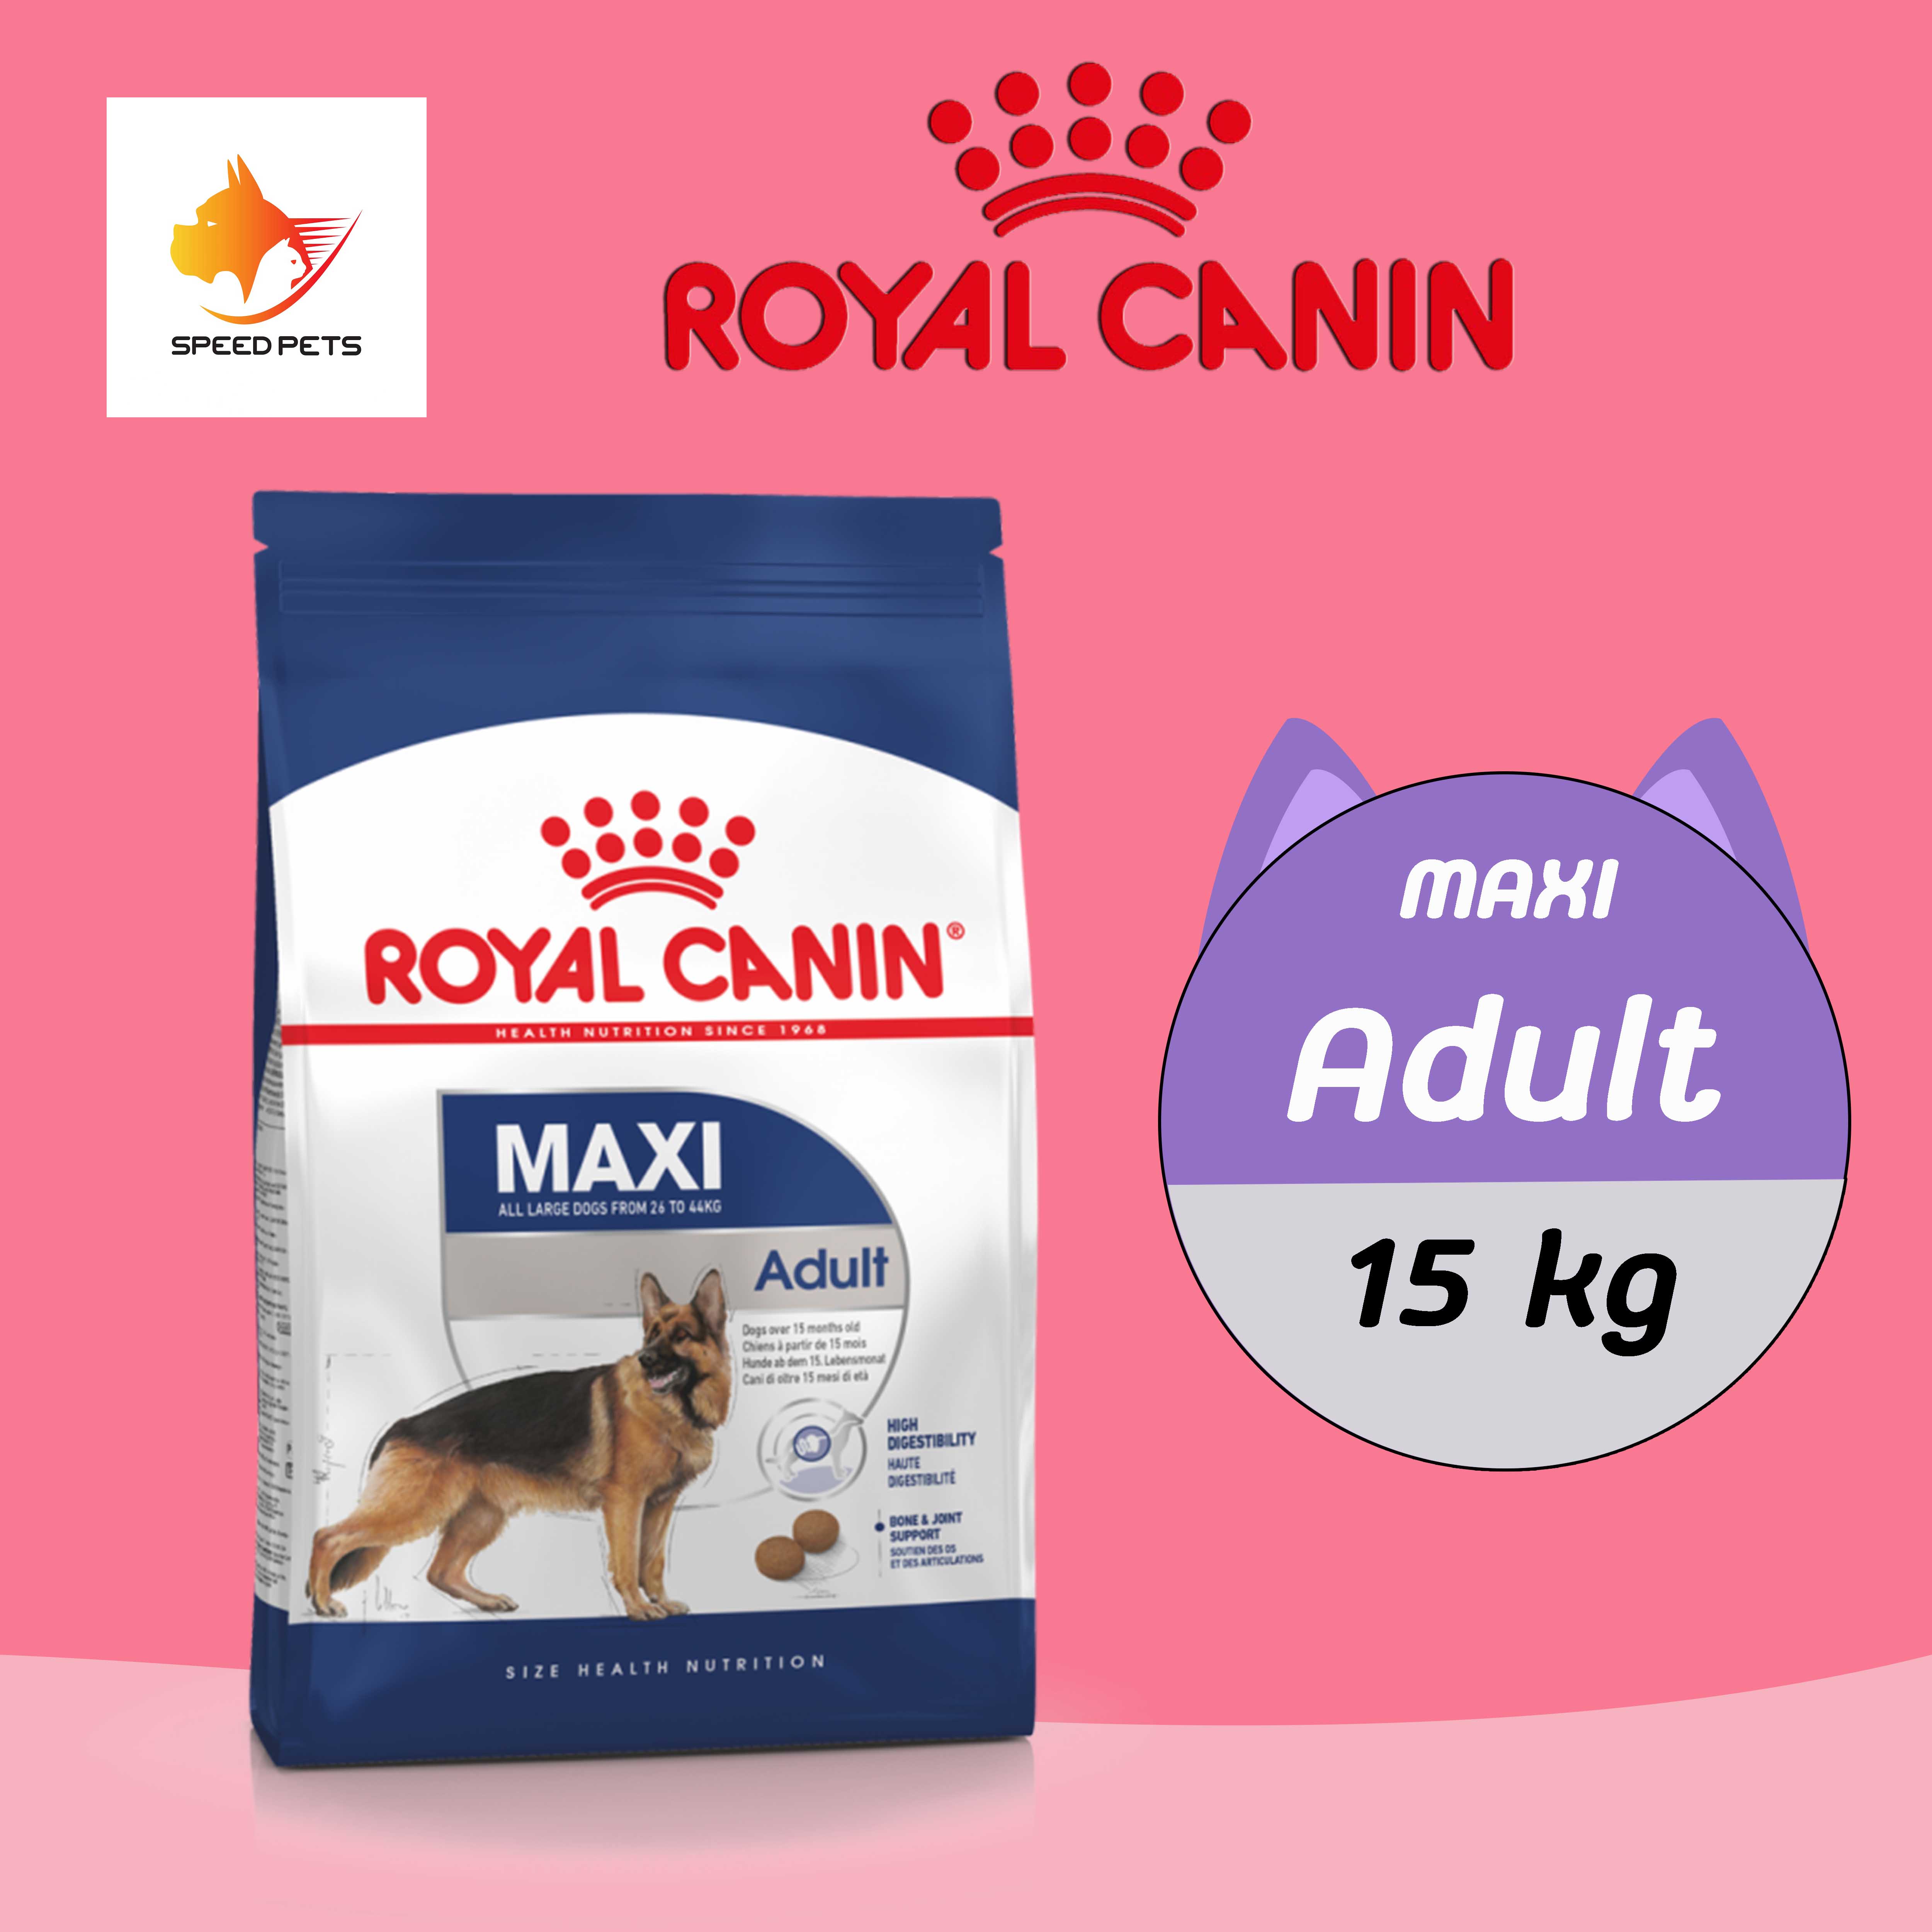 Royal Canin Maxi Adult dog 15kg โรยัล คานิน อาหารสุนัข พันธุ์ใหญ่ แบบเม็ด ขนาด 15 กก ( สีน้ำเงิน )